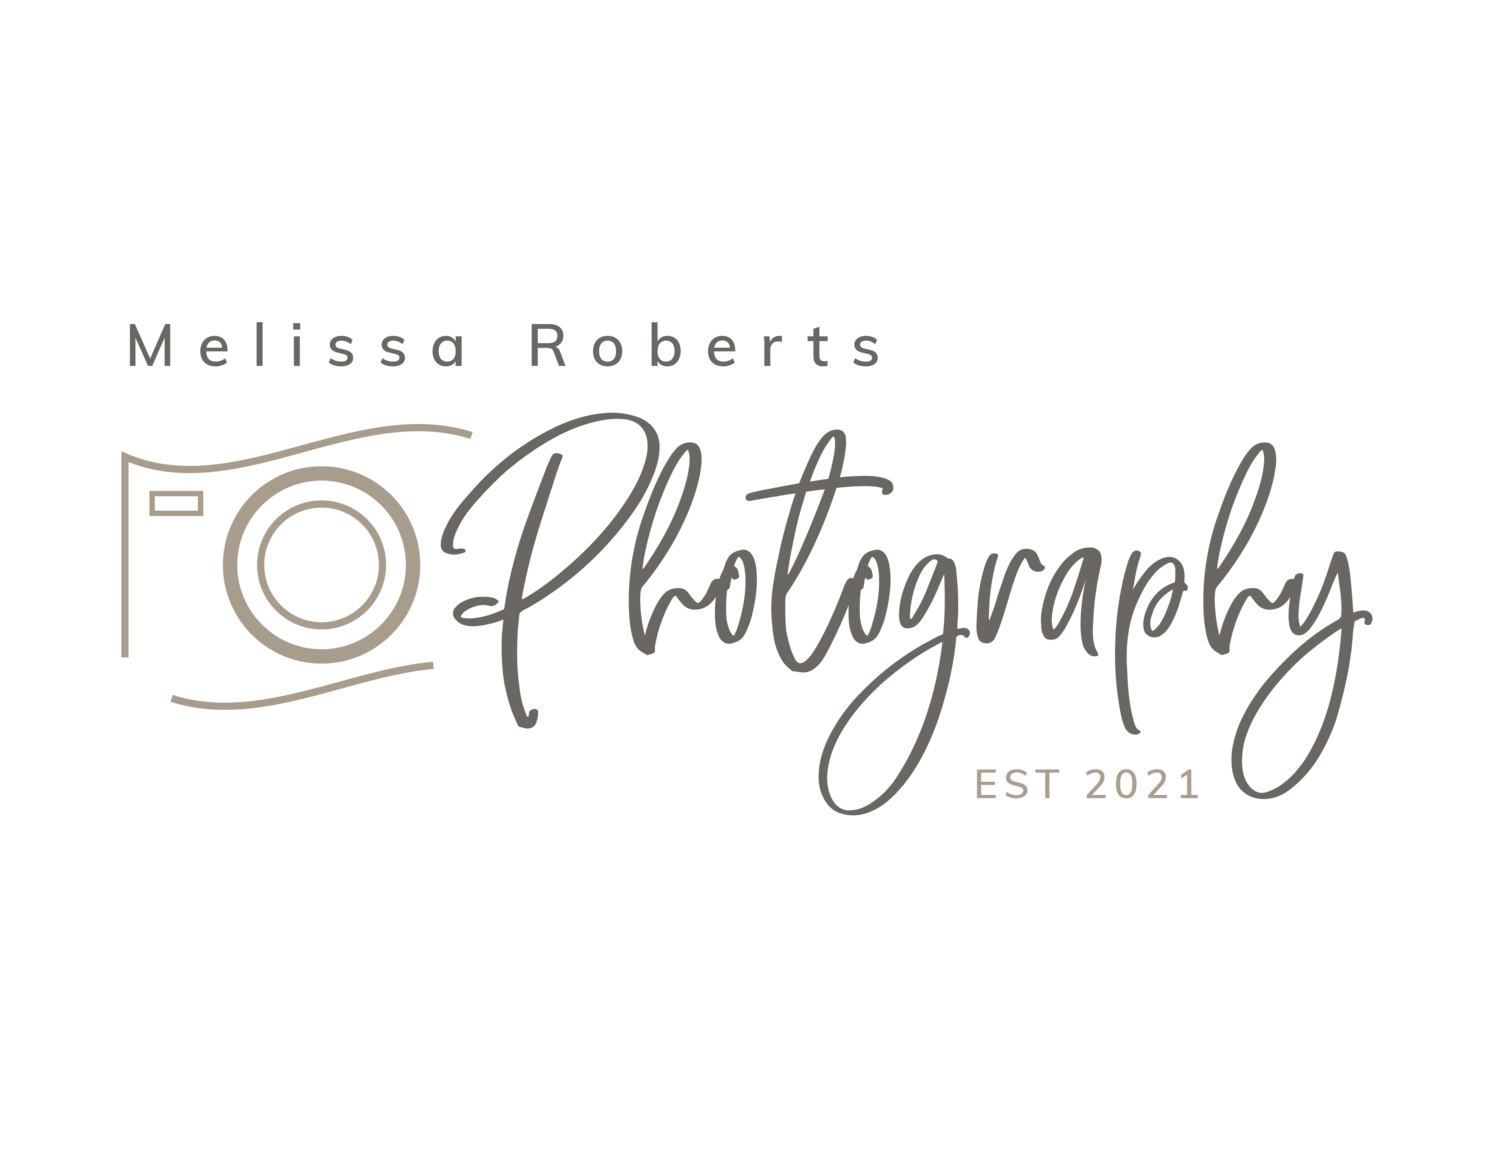 Melissa Roberts photography